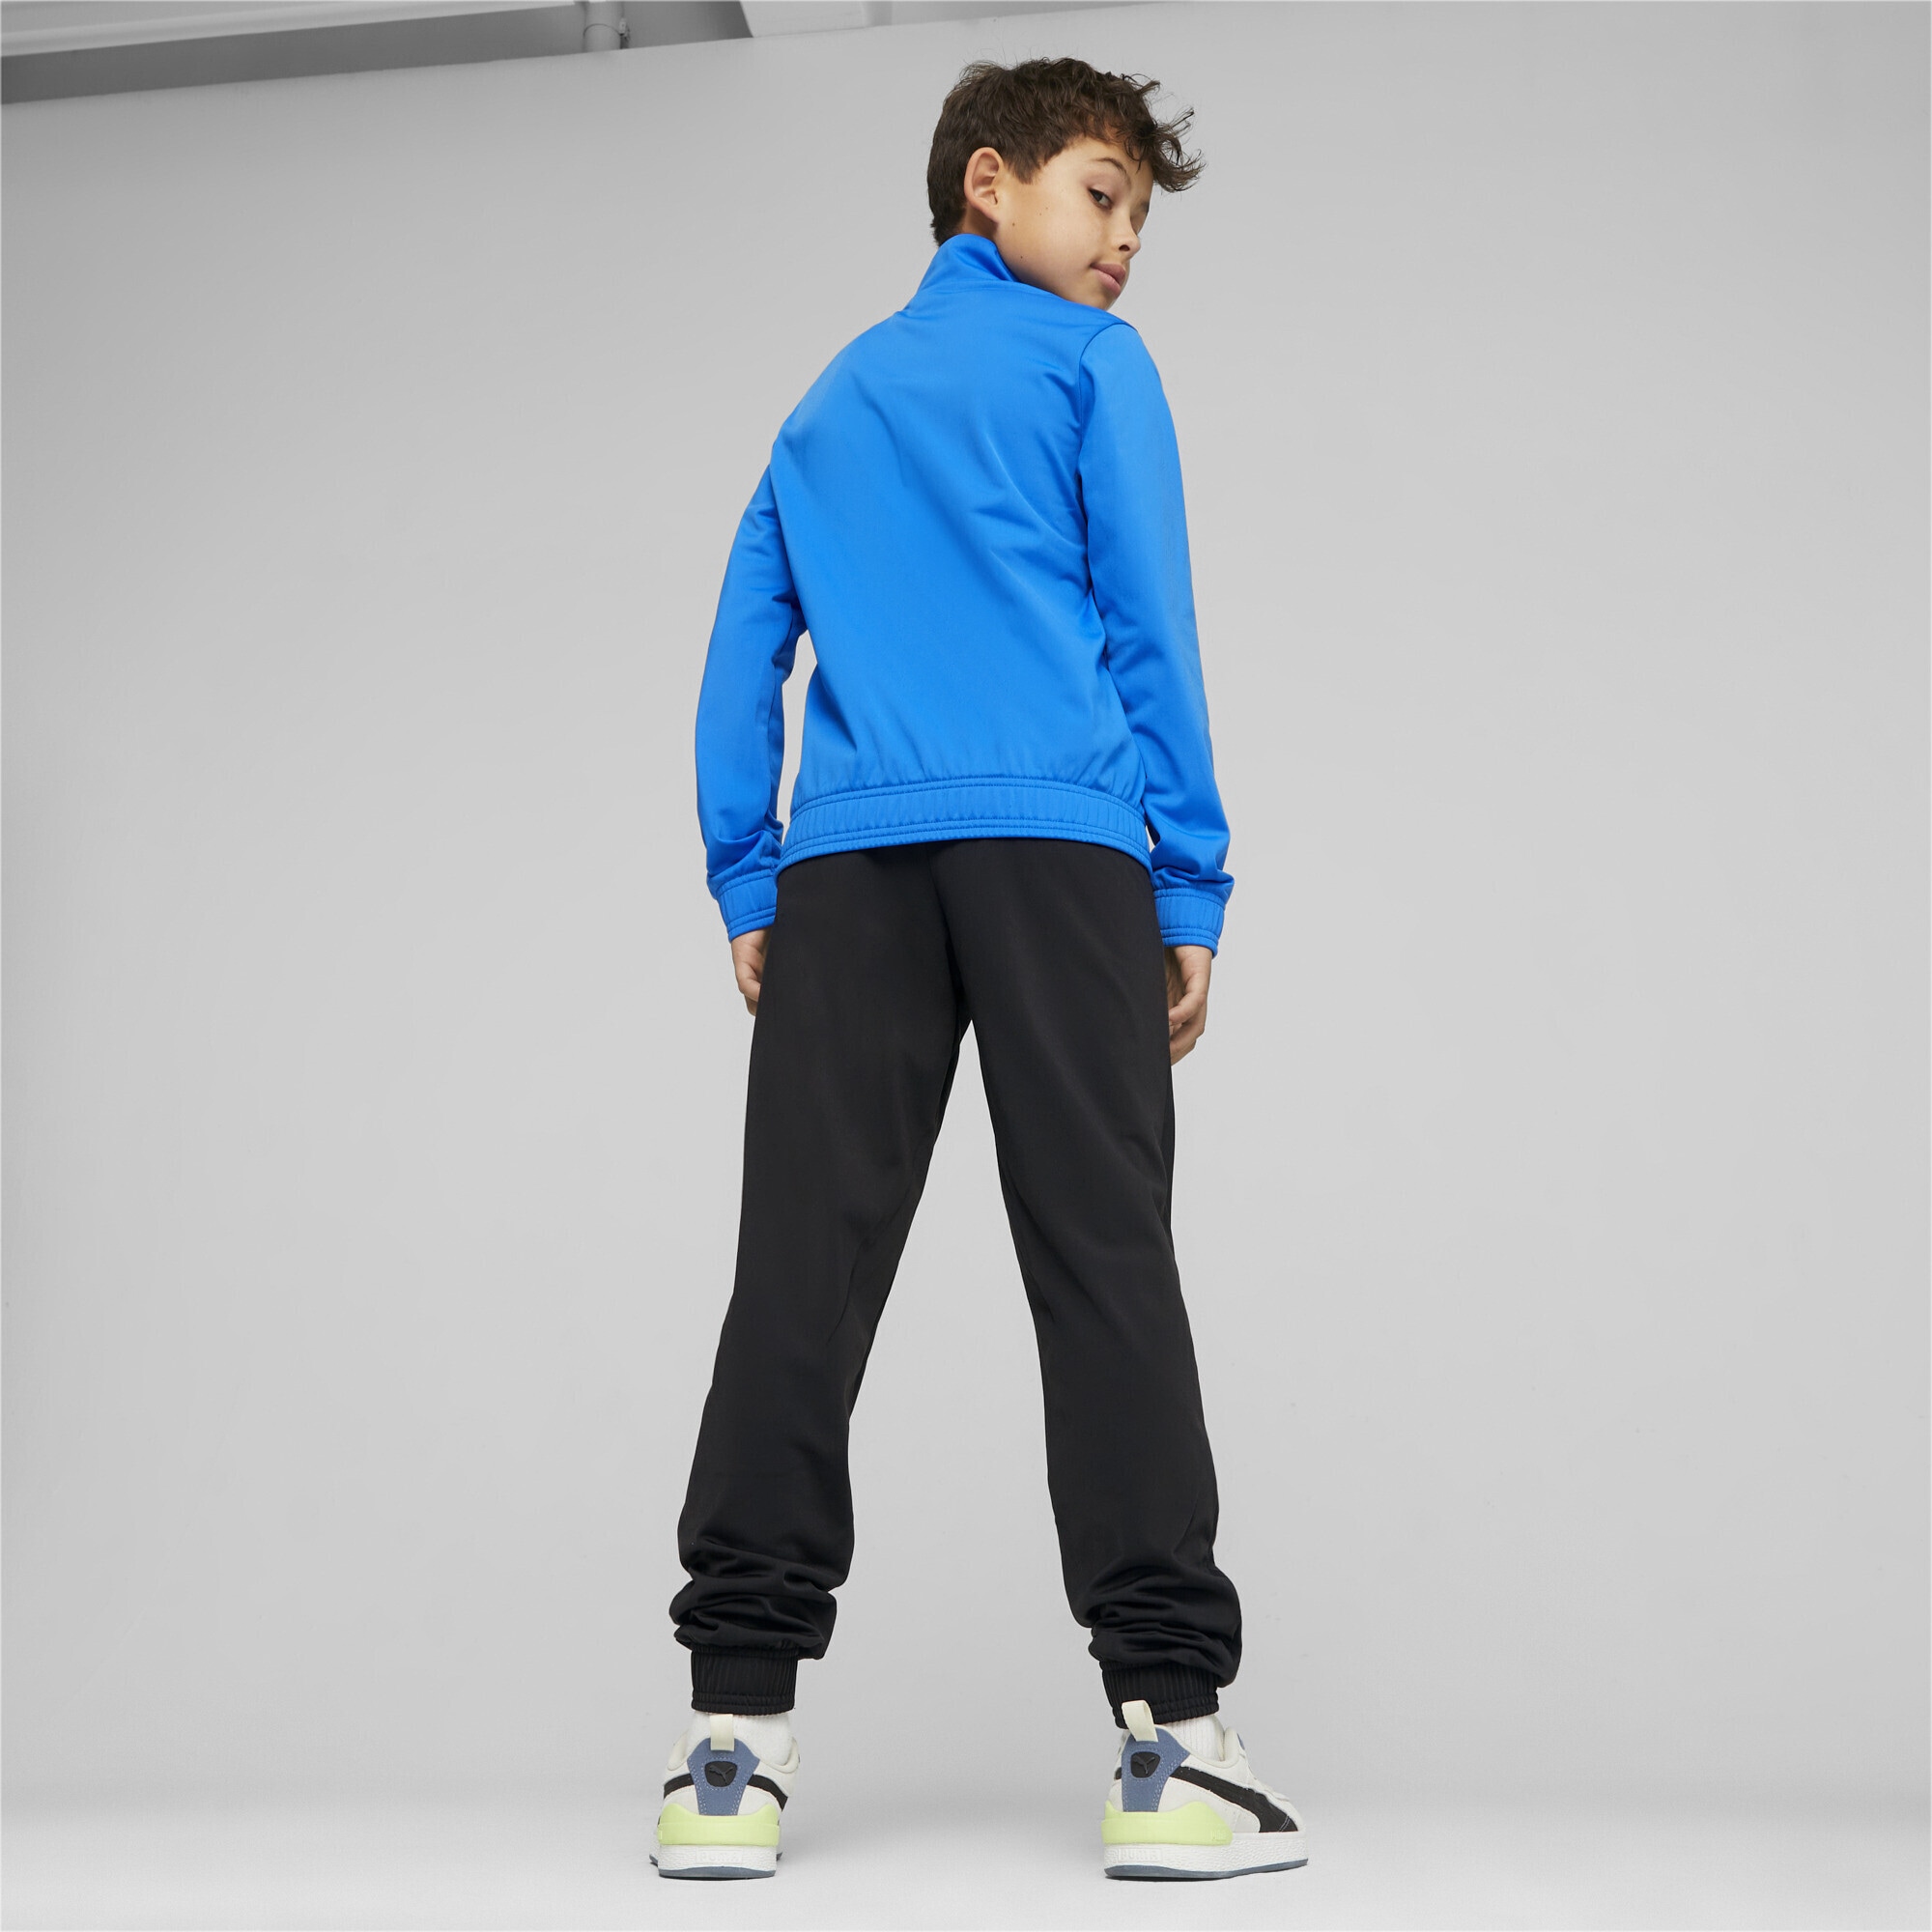 Polyester« Raten auf | Jogginganzug PUMA »Jugend-Trainingsanzug BAUR aus